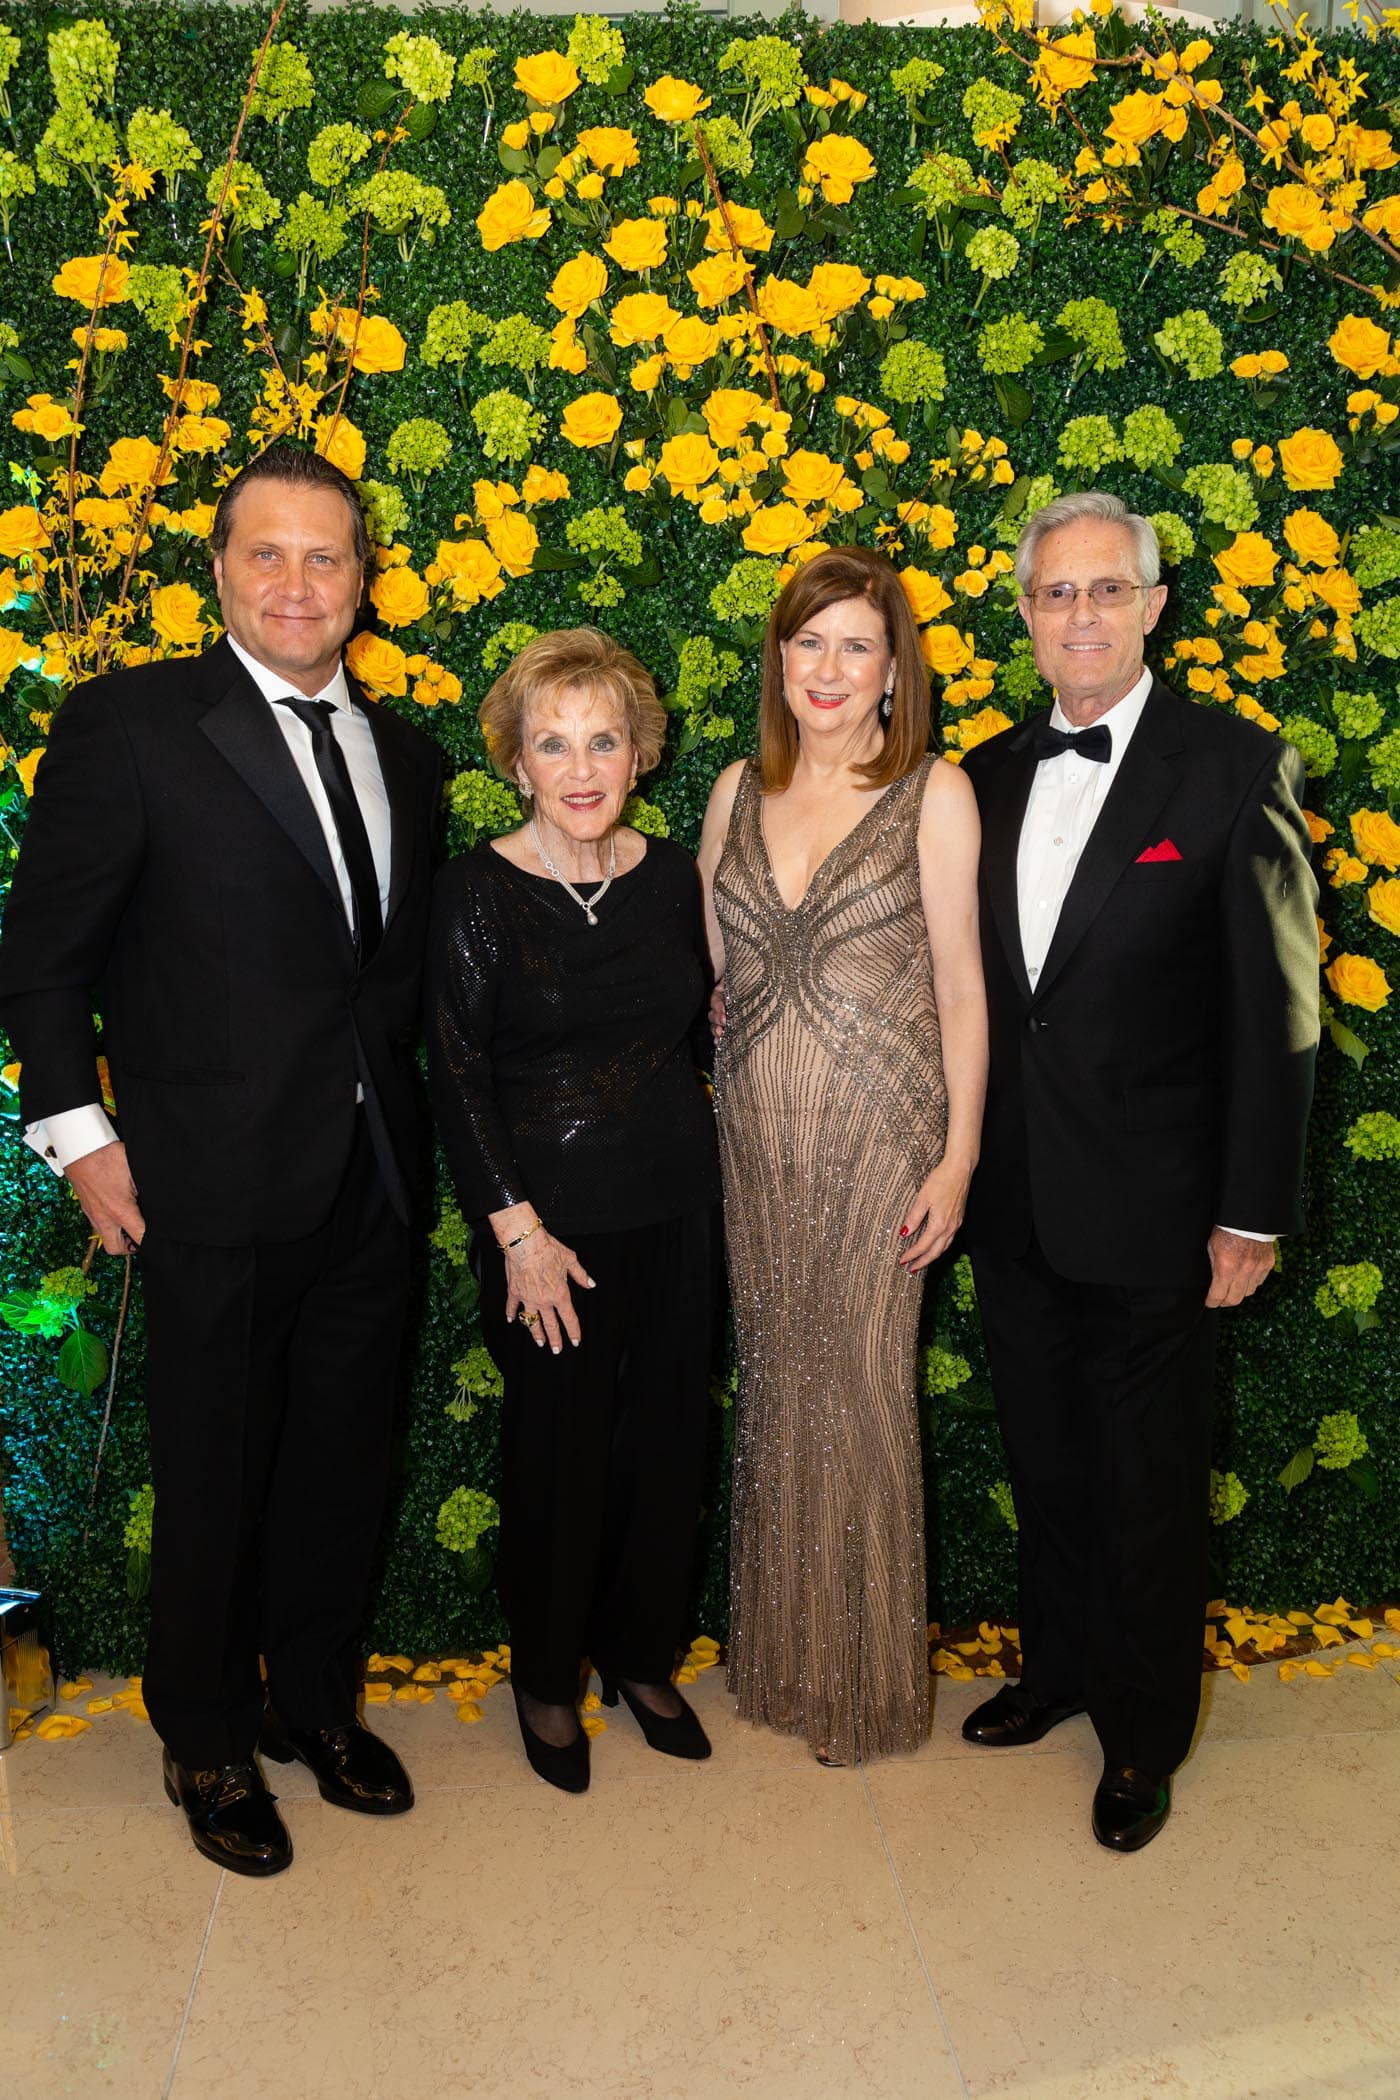 Richard and Barbara Cohen, Cherie Hurlbut and Howard Schwartz